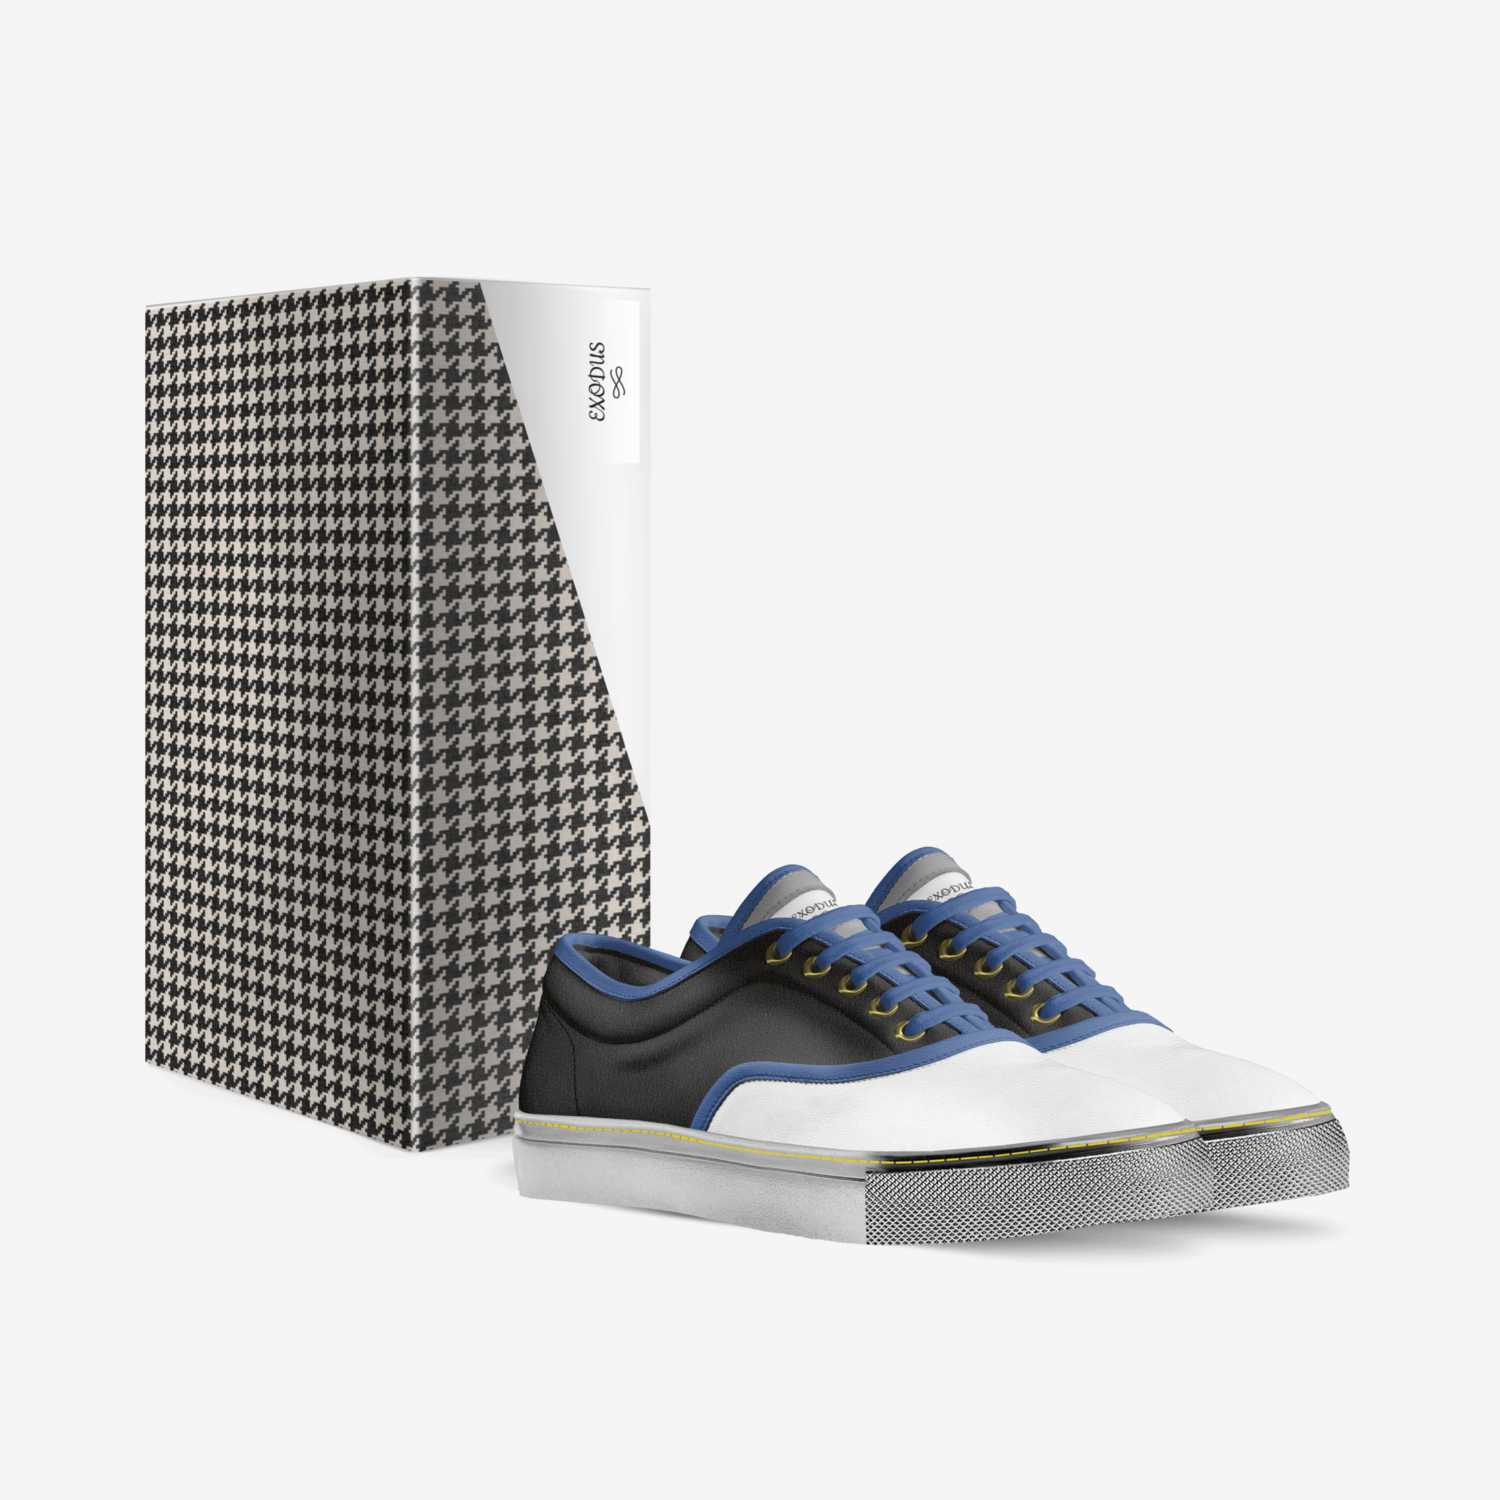 EXODUS custom made in Italy shoes by Gloria Walton | Box view